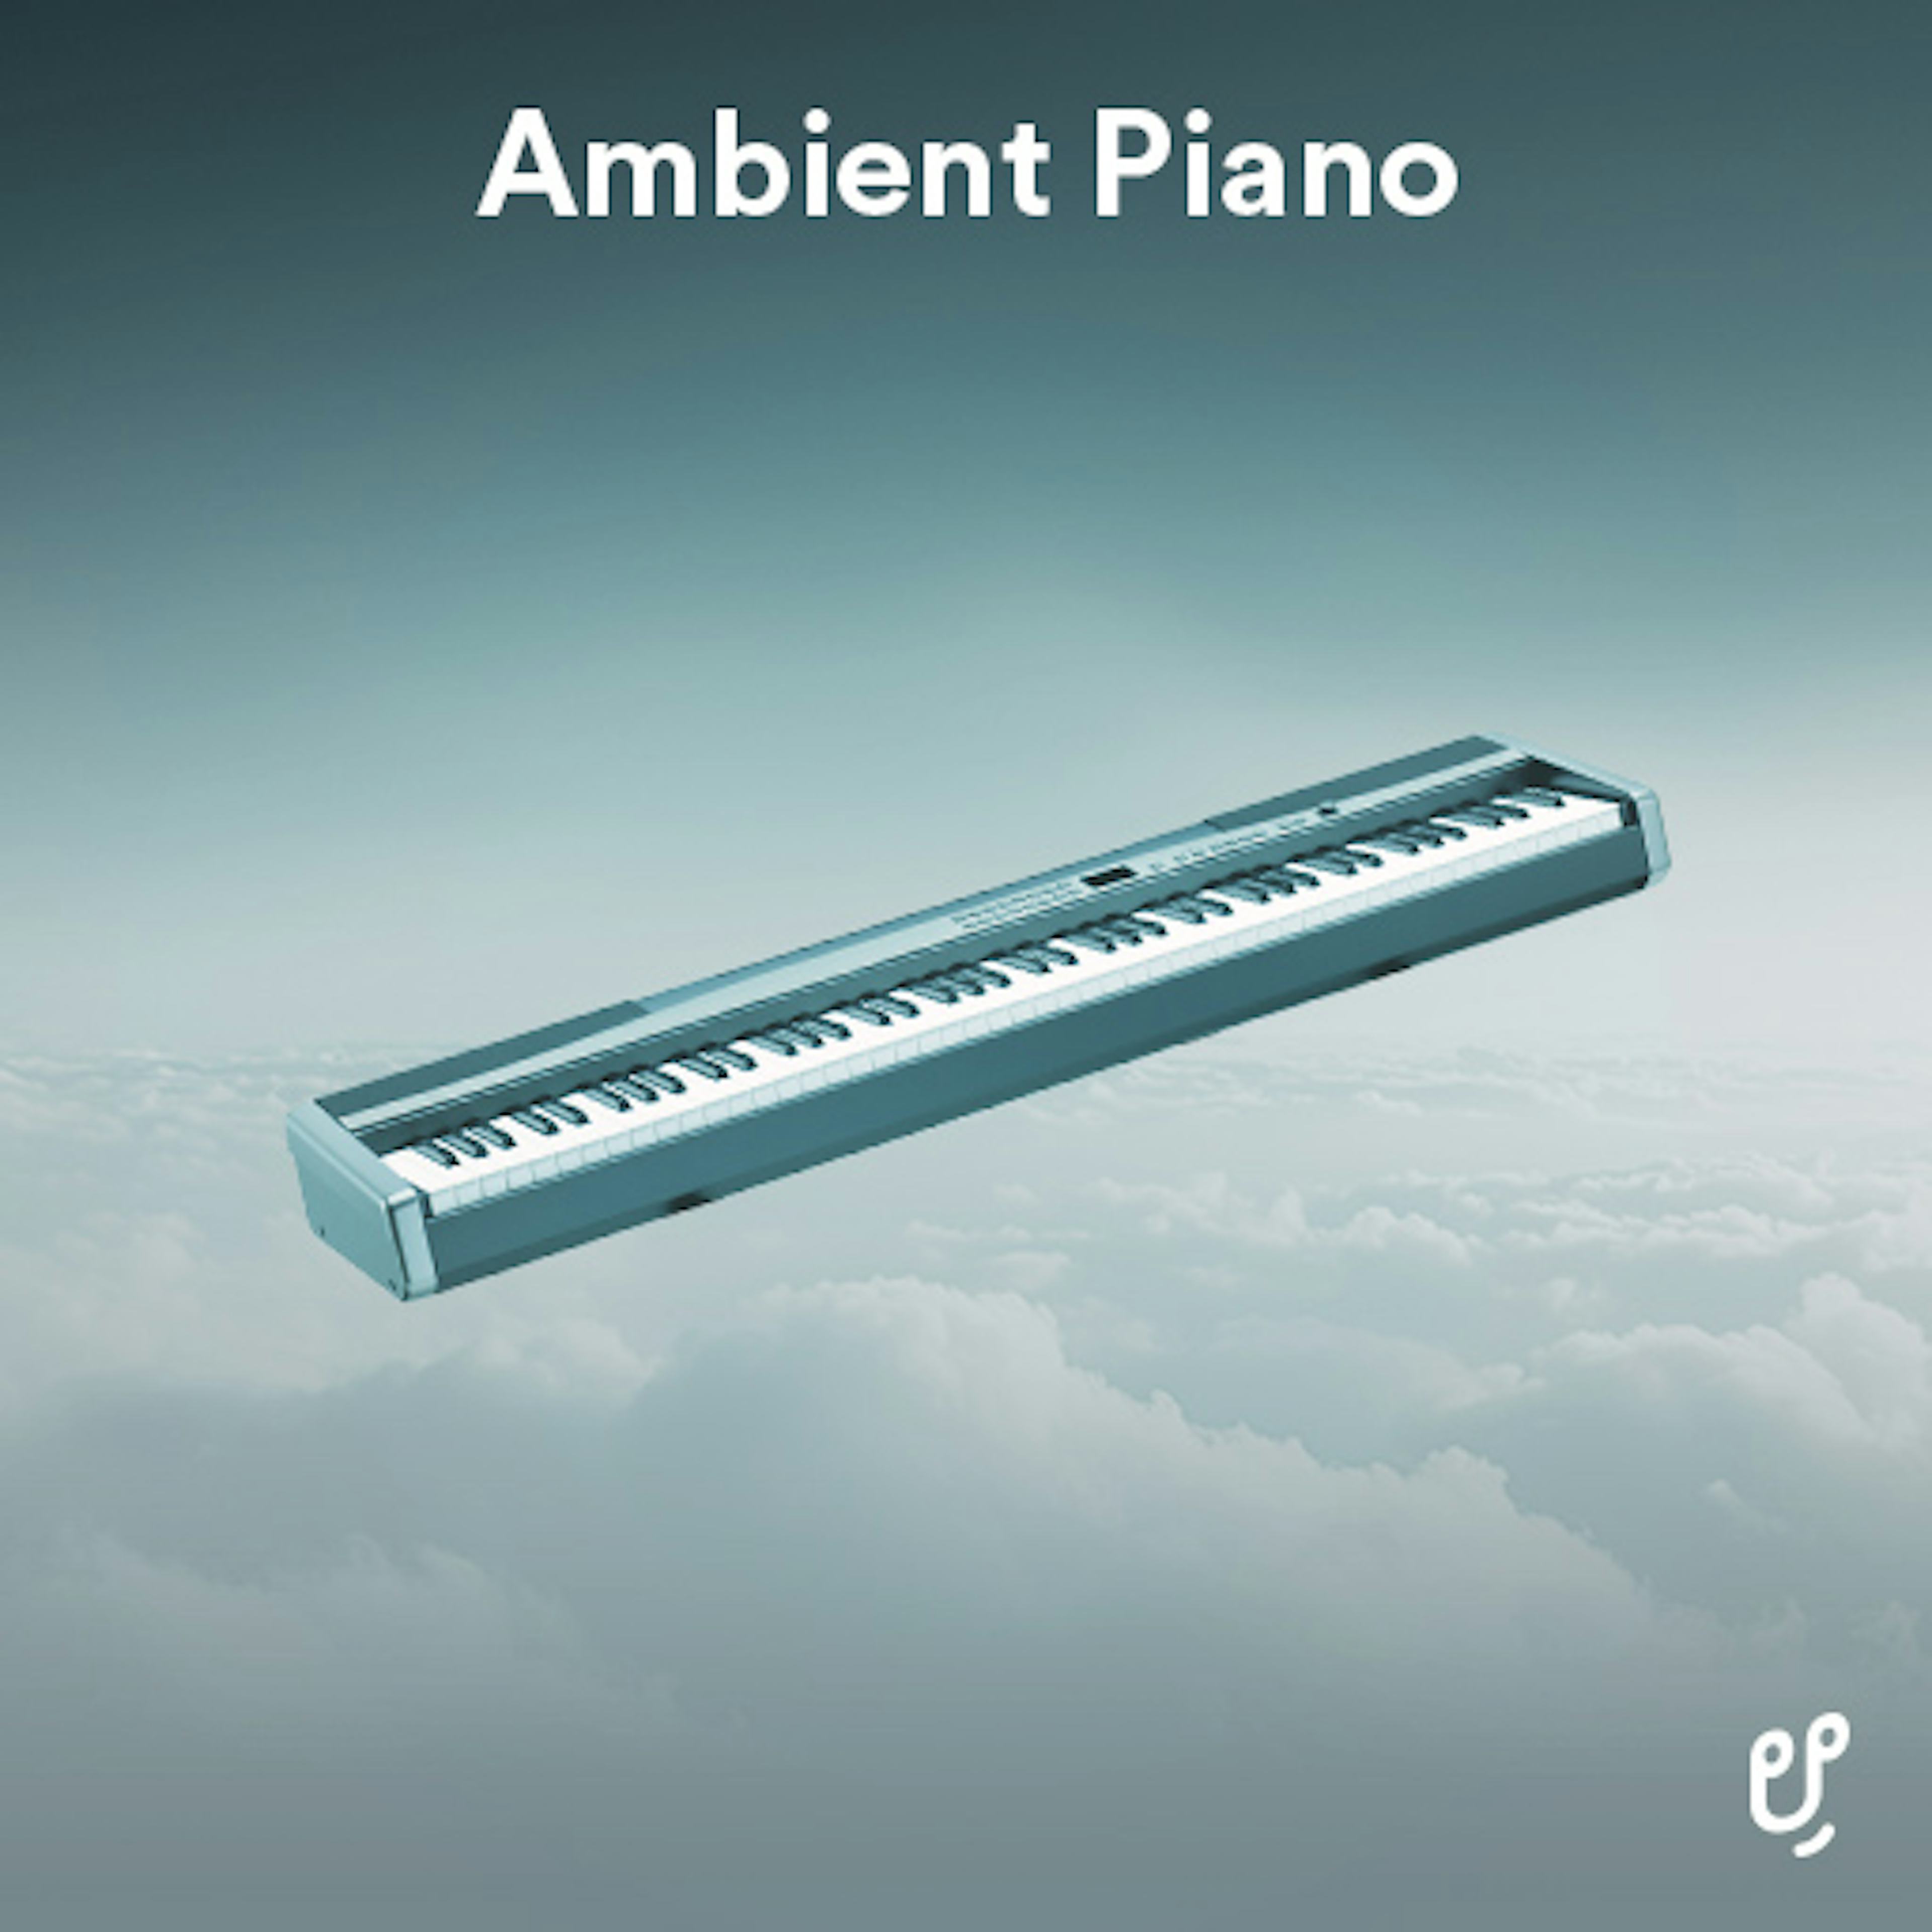 Ambient Piano artwork